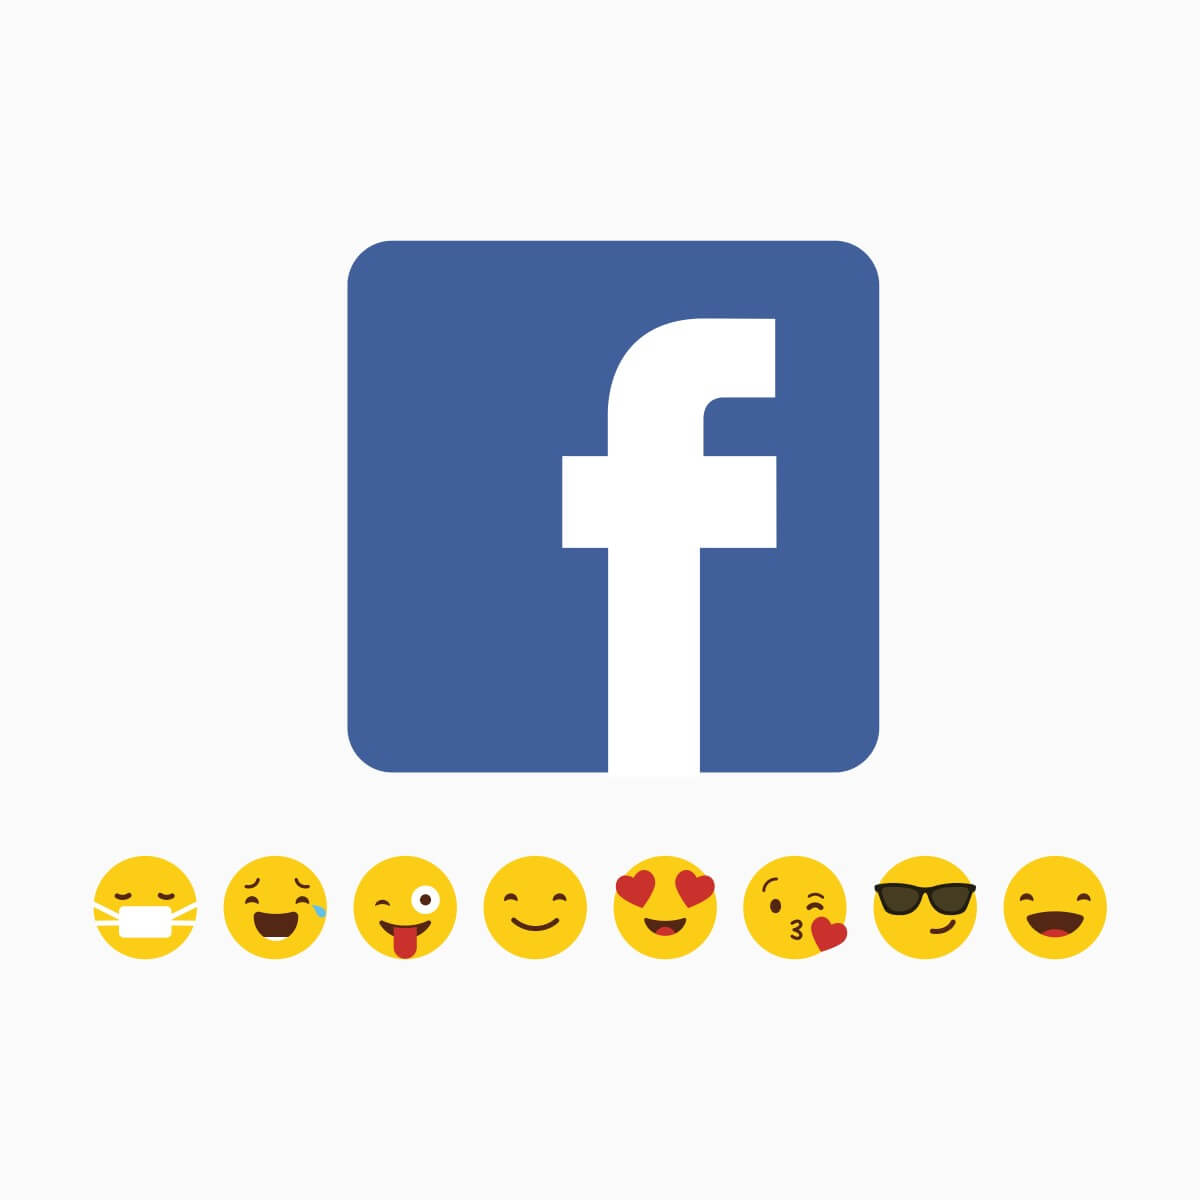 a-facebook-logo-with-emojis-underneath